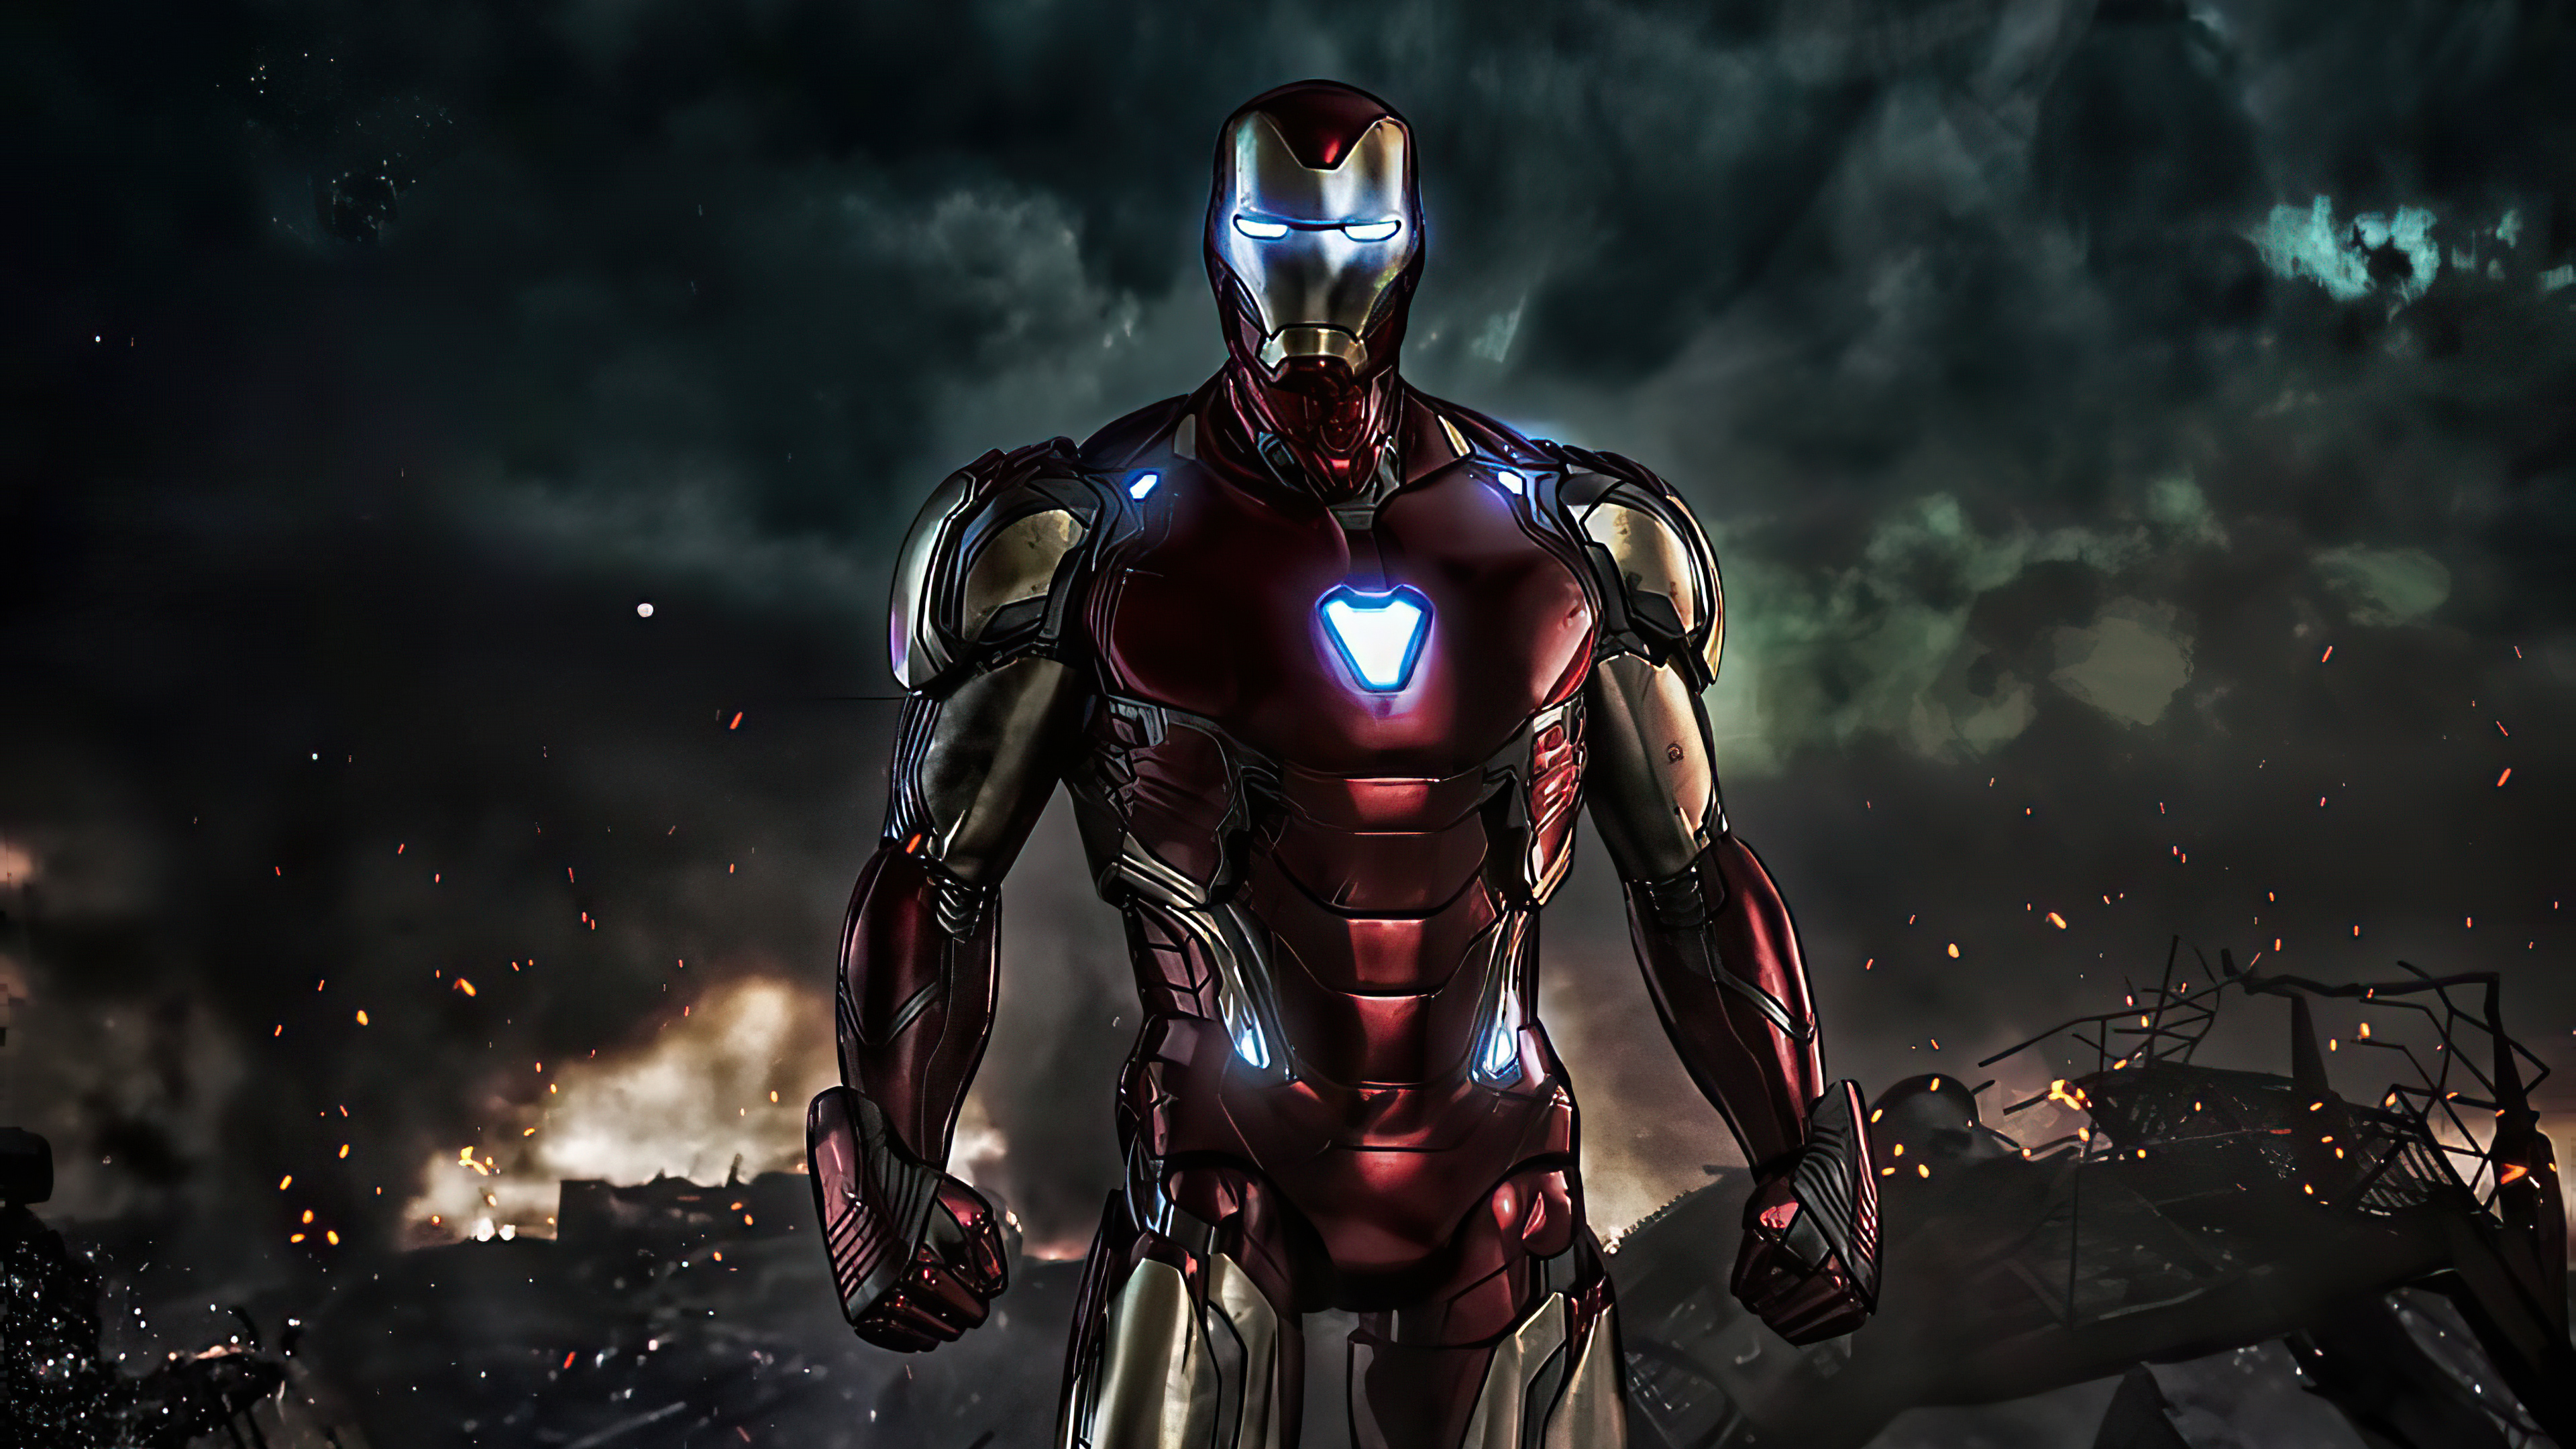 4k Iron Man Endgame 2020, HD Superheroes, 4k Wallpapers ...